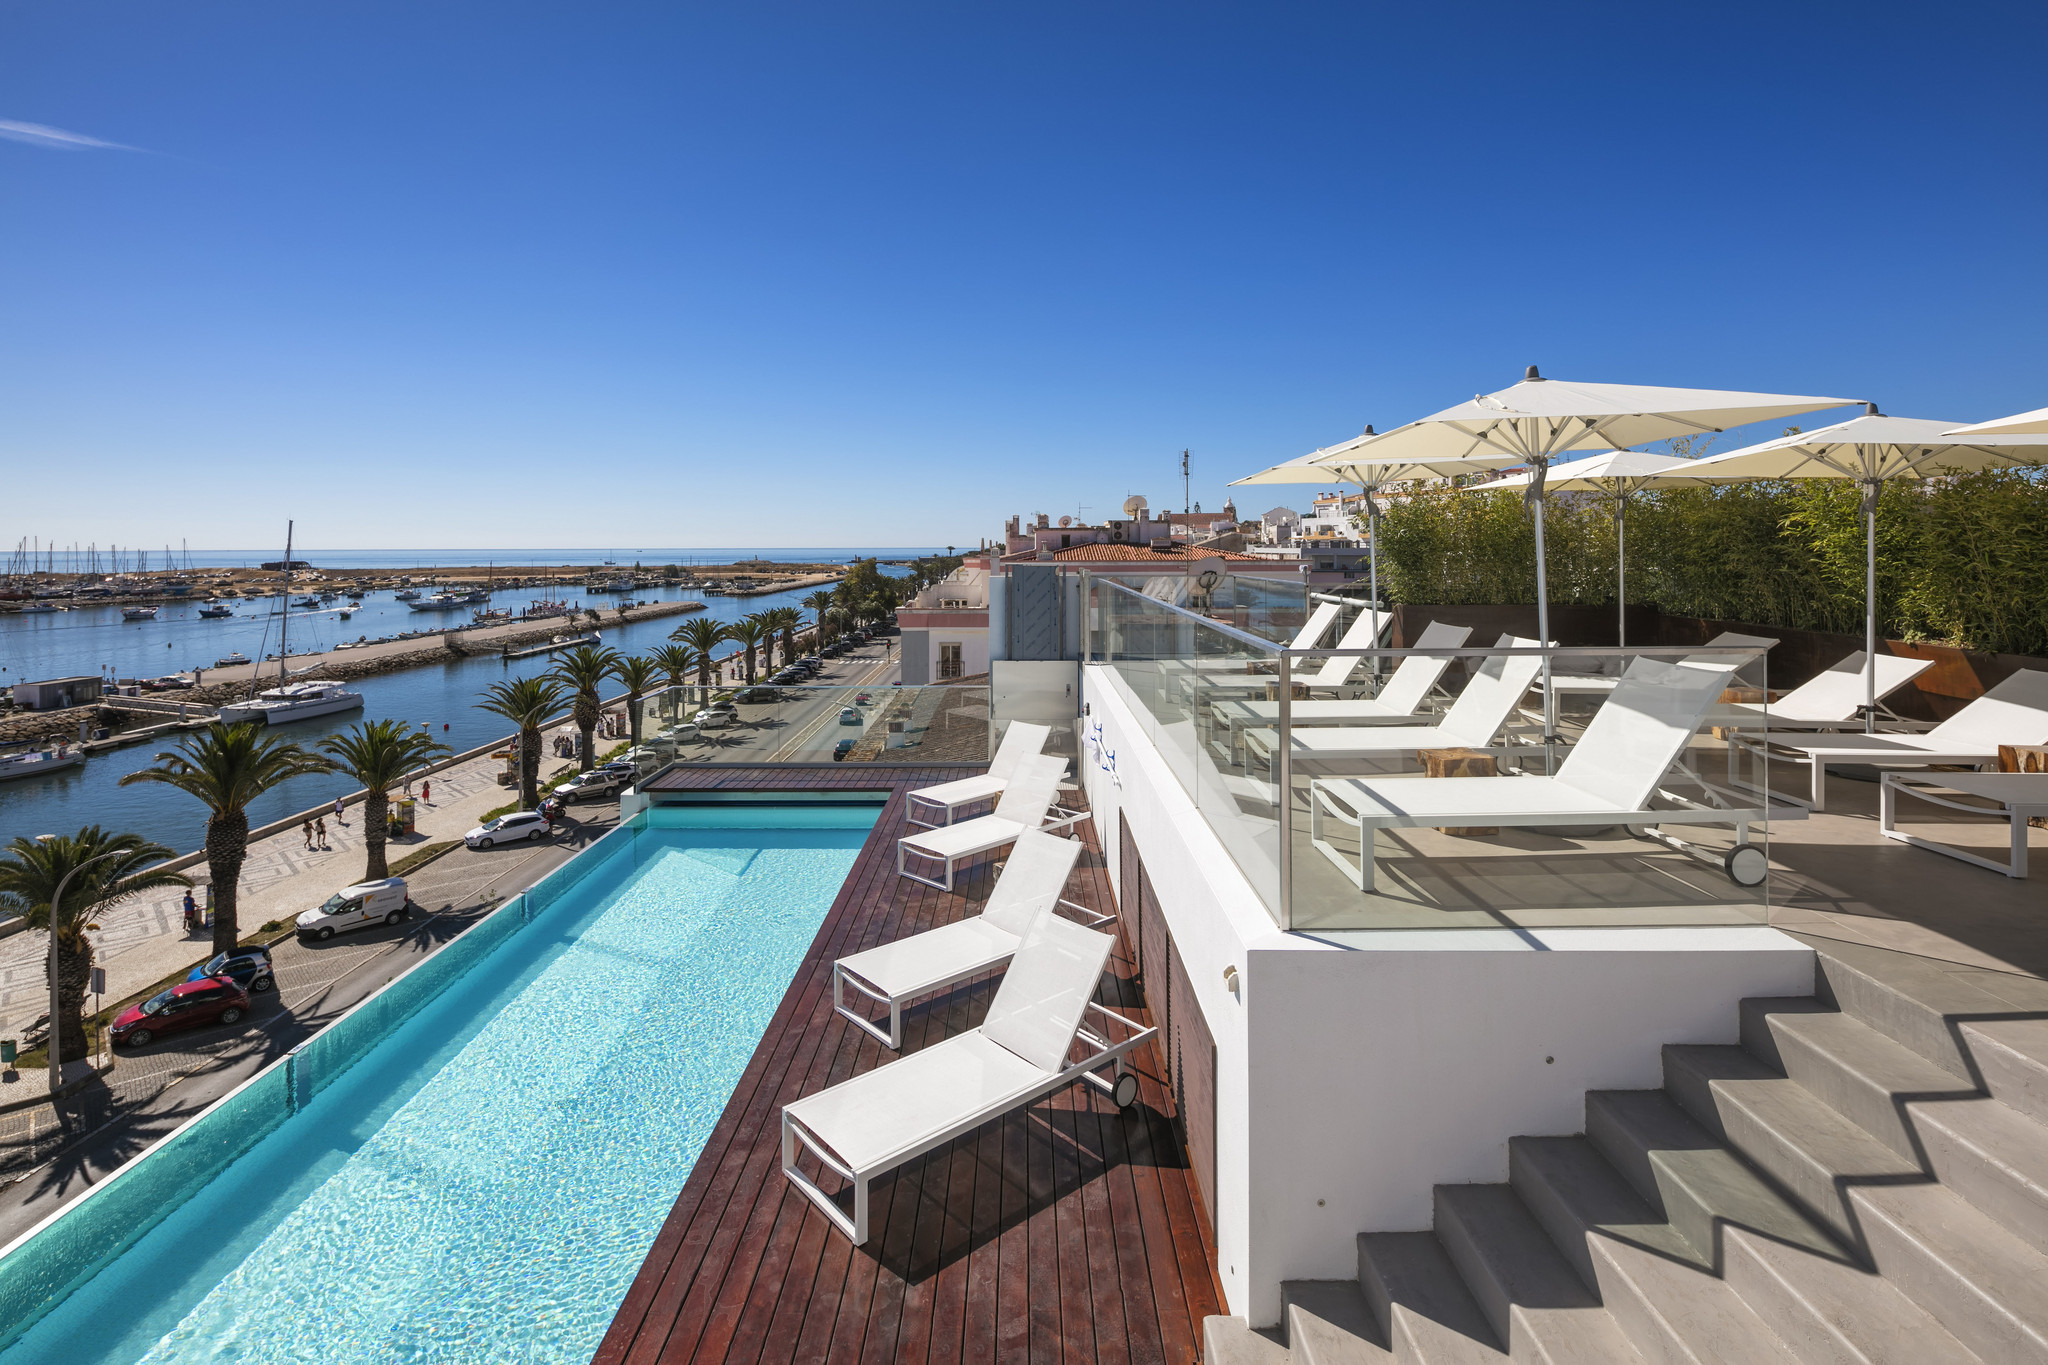 Lagos Avenida Hotel - Algarve 256A8461.jpg